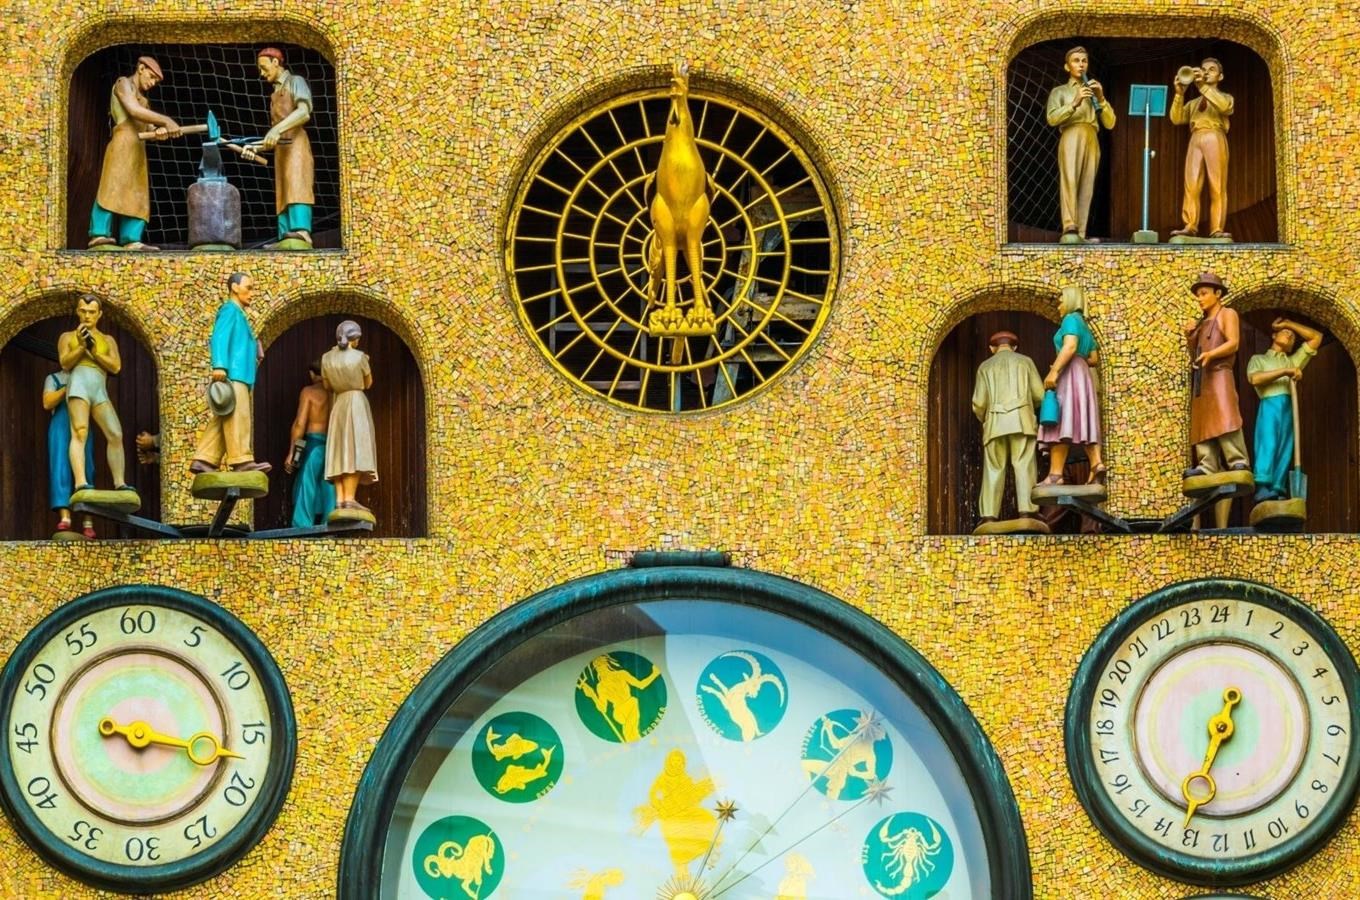 Olomoucký orloj s figurkami proletářů